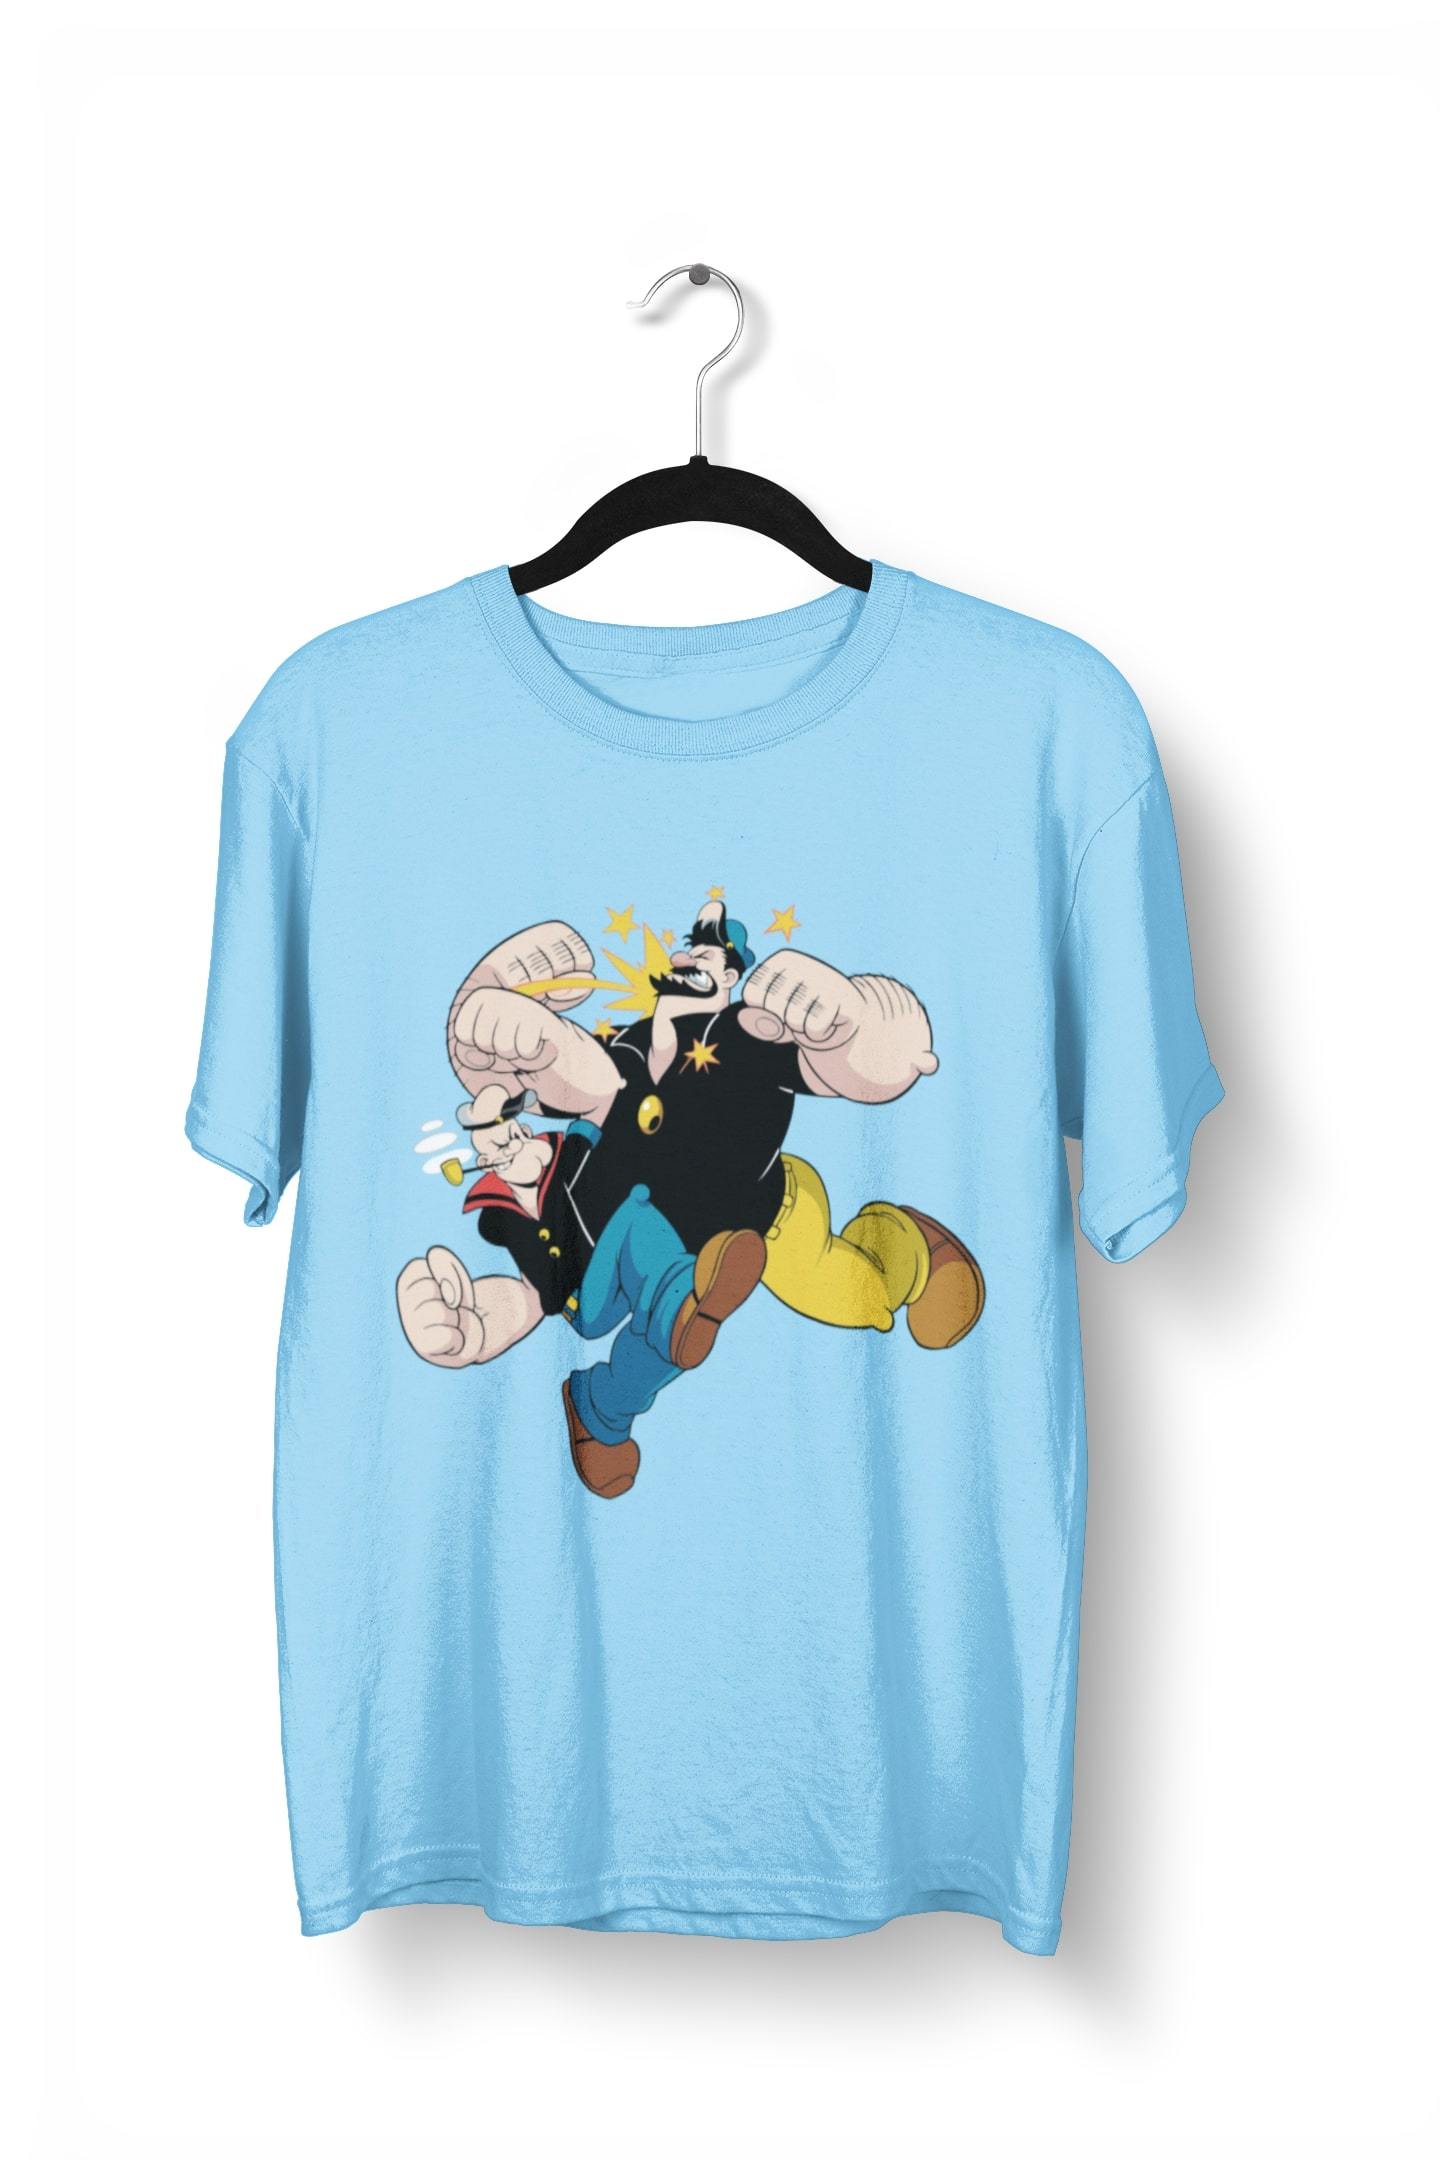 thelegalgang,Popeye Bluto T-Shirt for Men,.